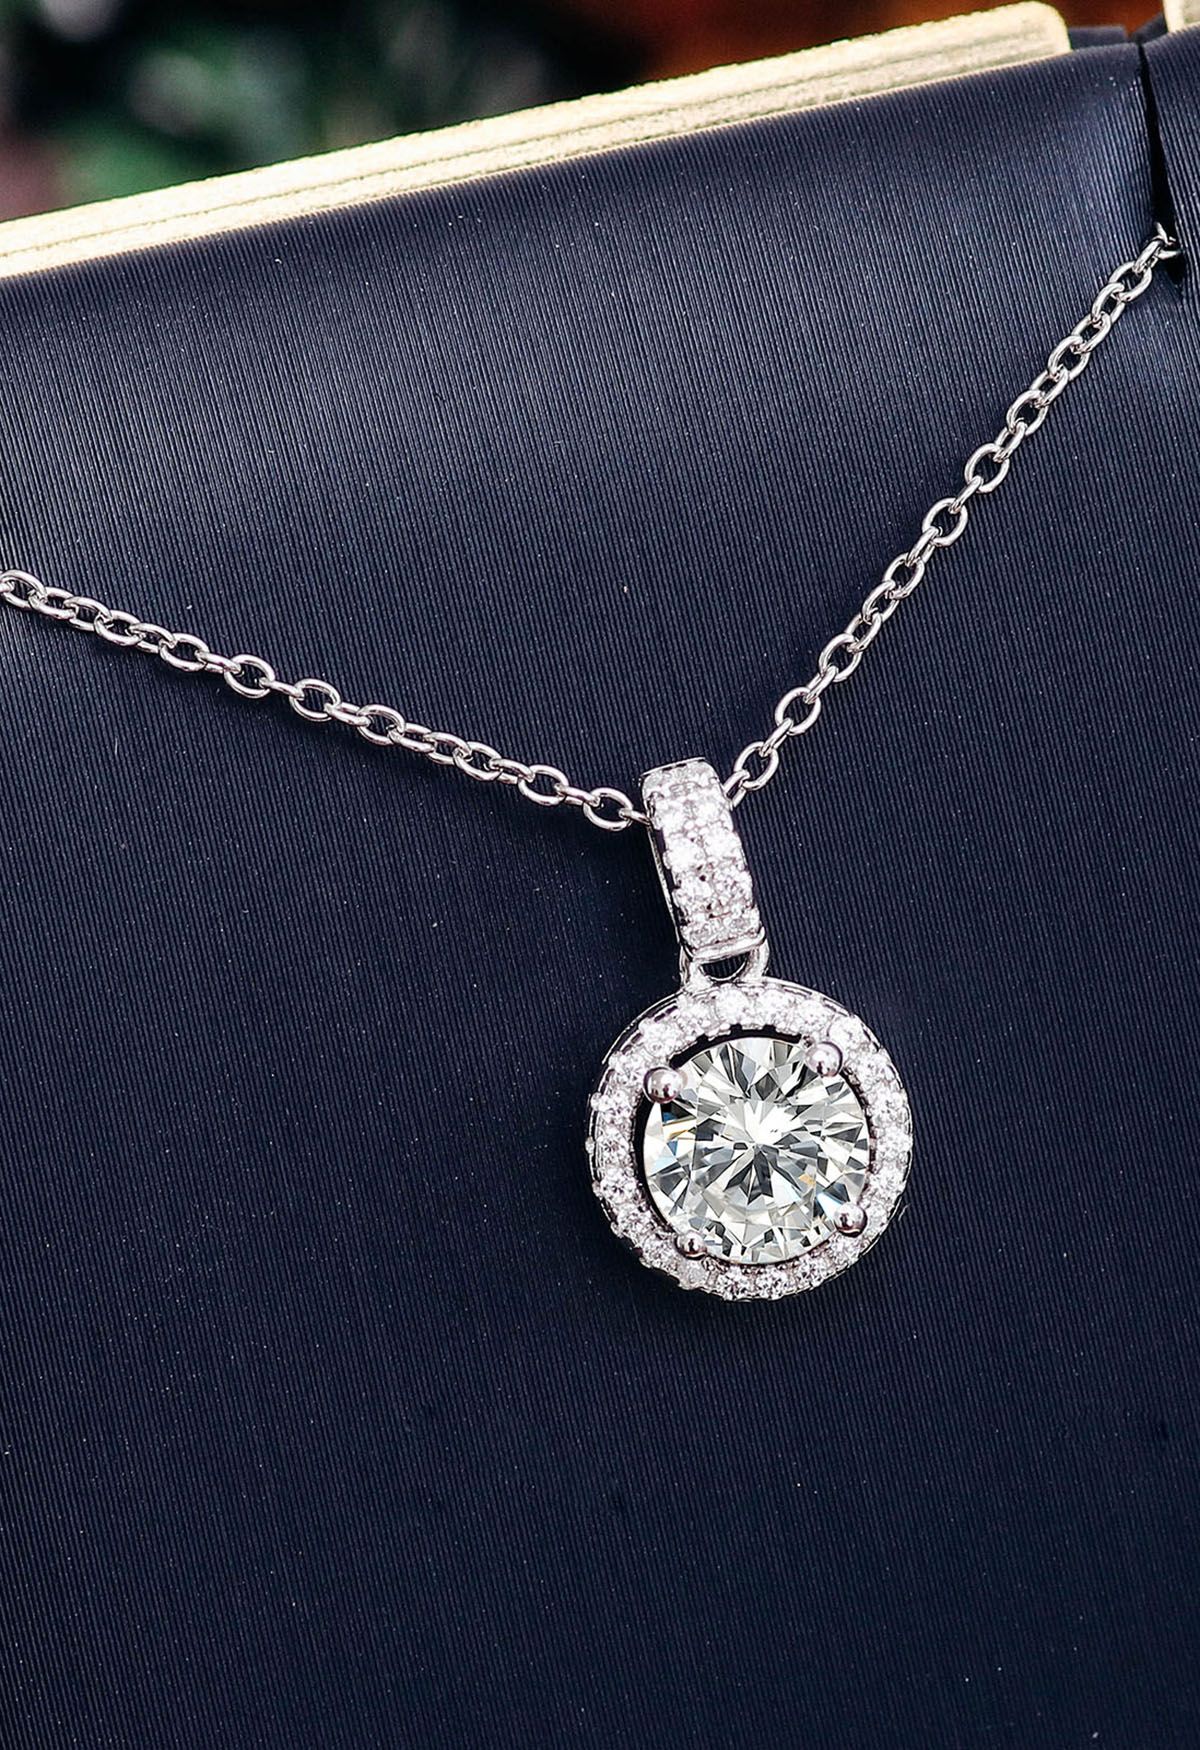 Round Cut Moissanite Diamond Necklace